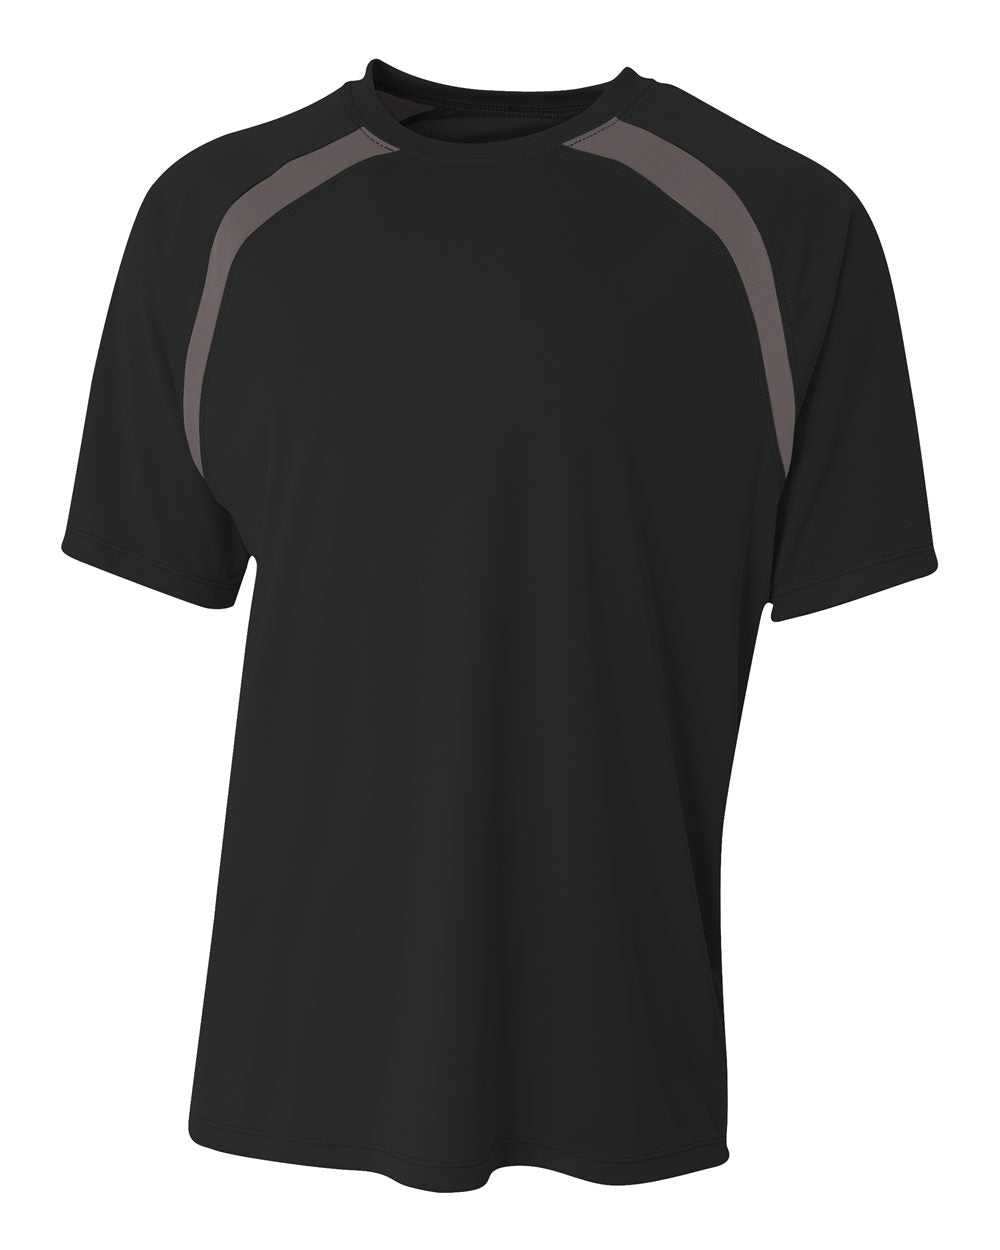 A4 N3001 Spartan Short Sleeve Color Block Crew - Black Graphite - HIT a Double